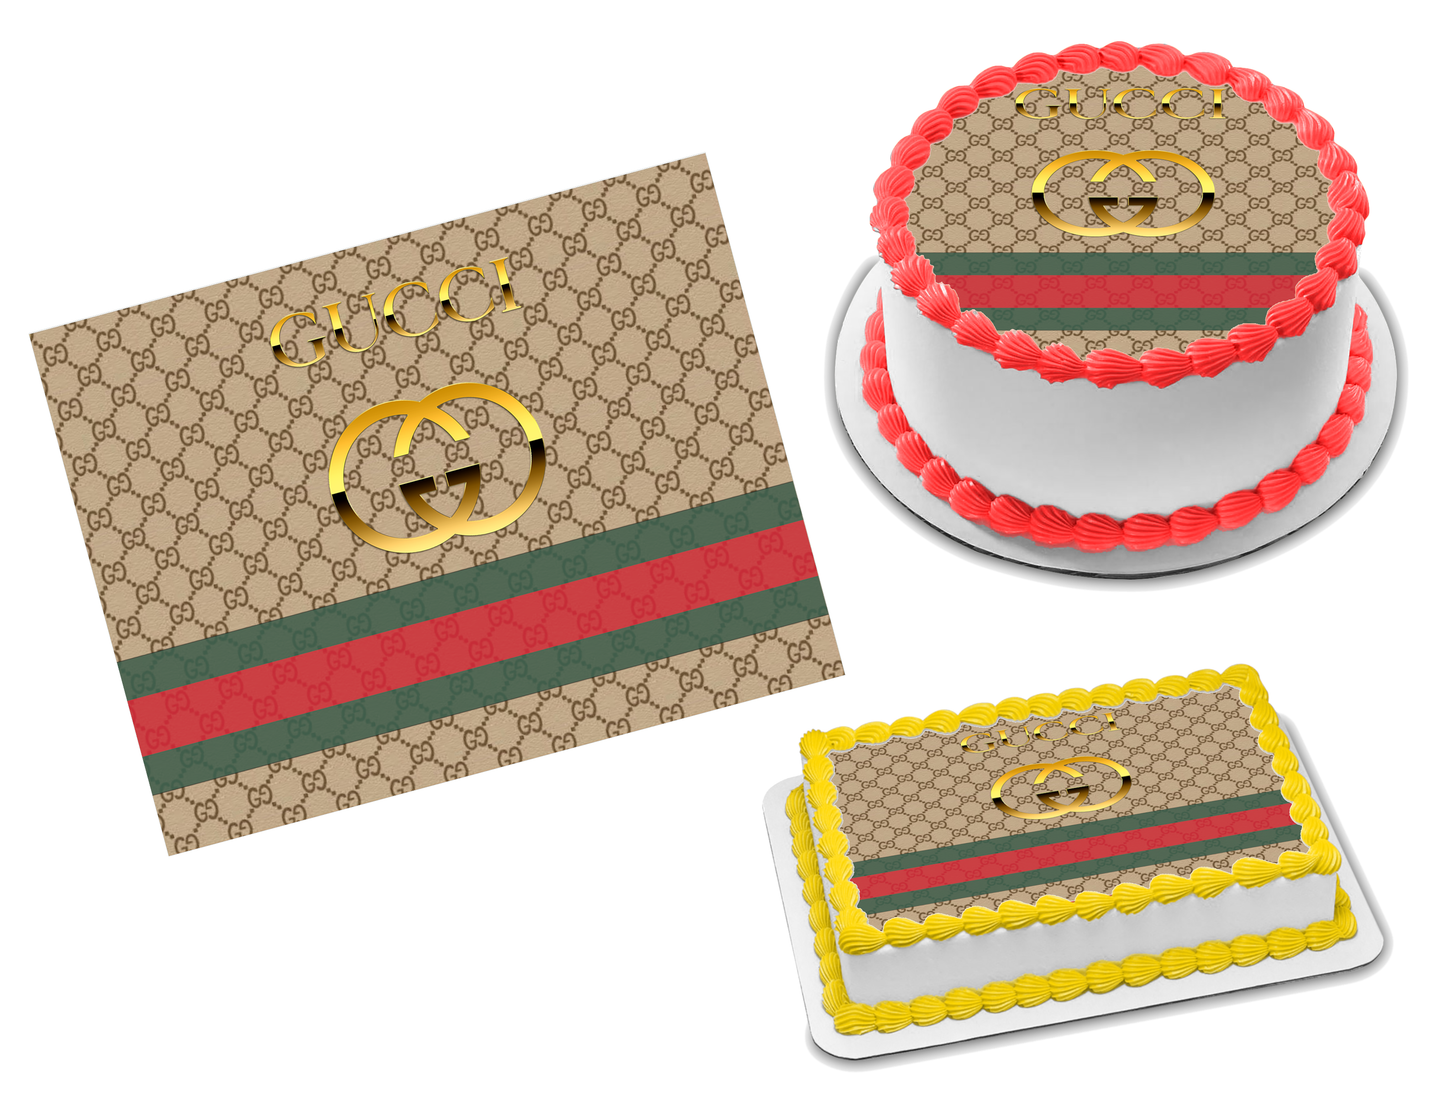 Gucci Print EDIBLE Cake Topper Image, Cupcakes, or Cake Wraps, Gucci Cake,  Gucci Cupcakes